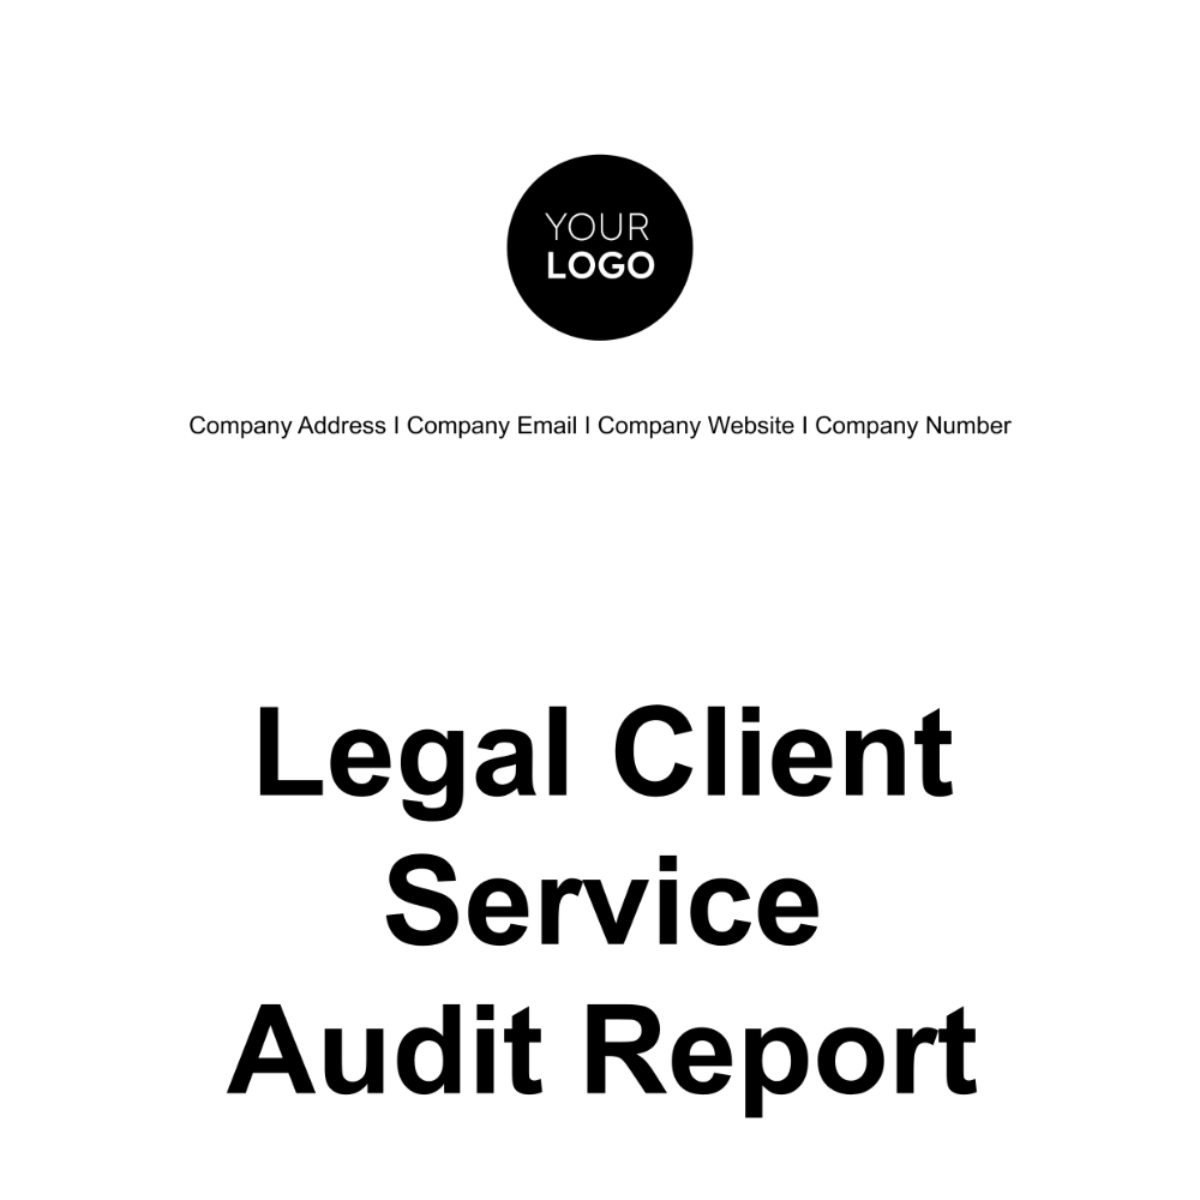 Free Legal Client Service Audit Report Template